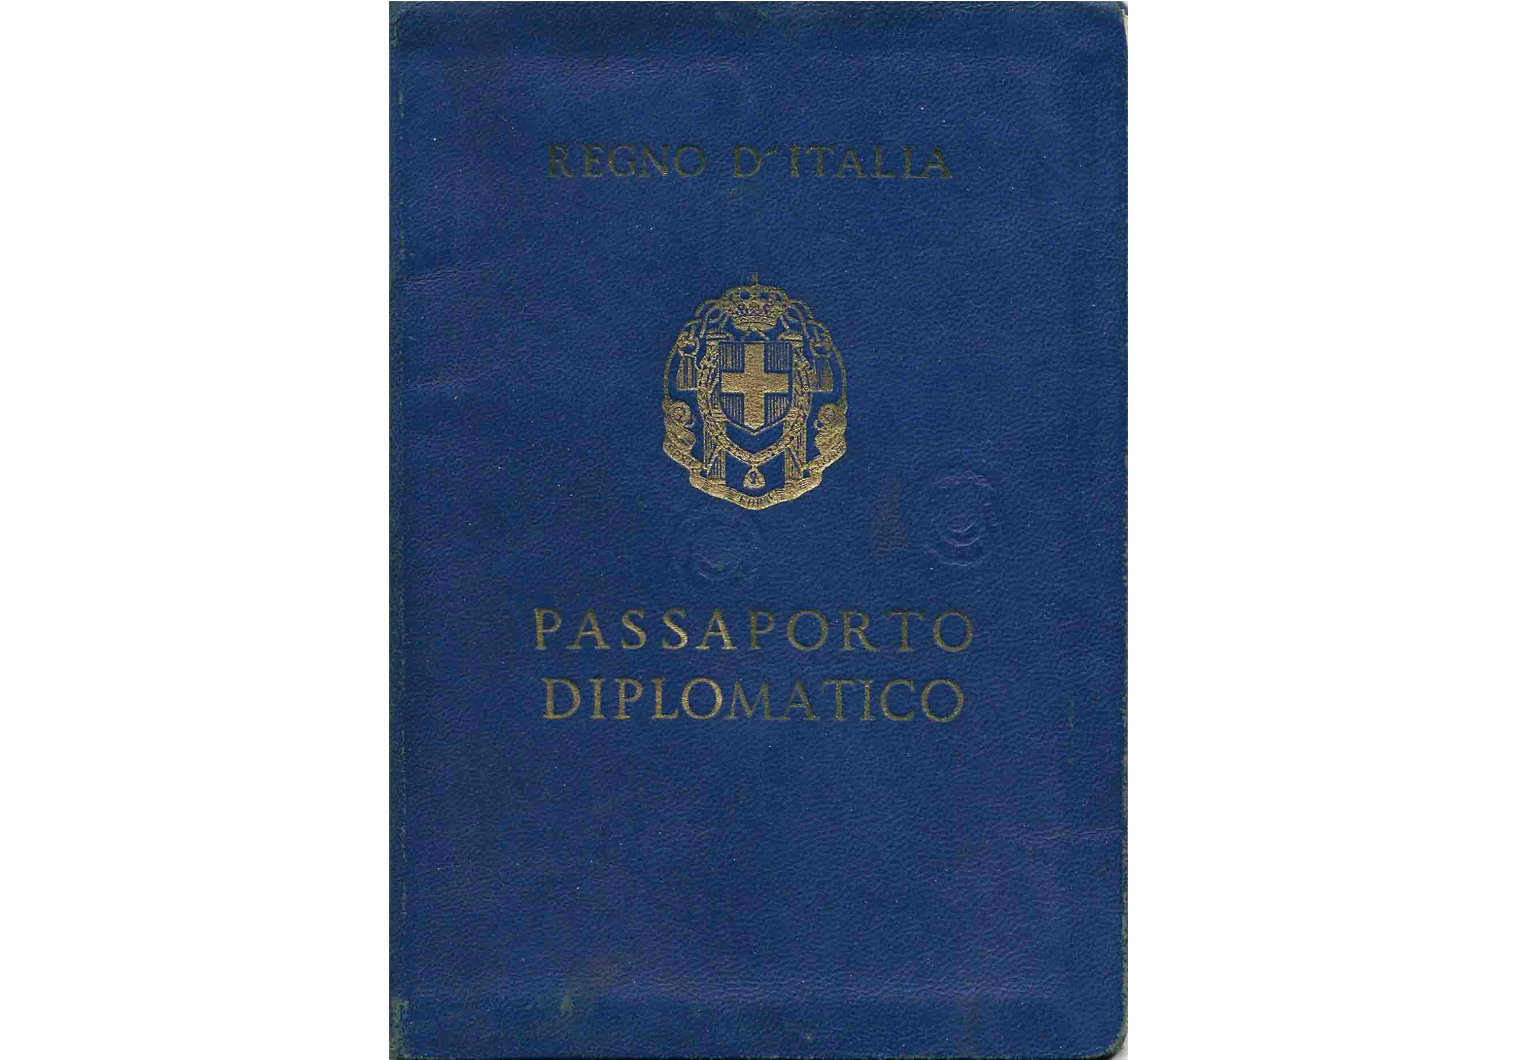 Important WW2 Diplomatic passport